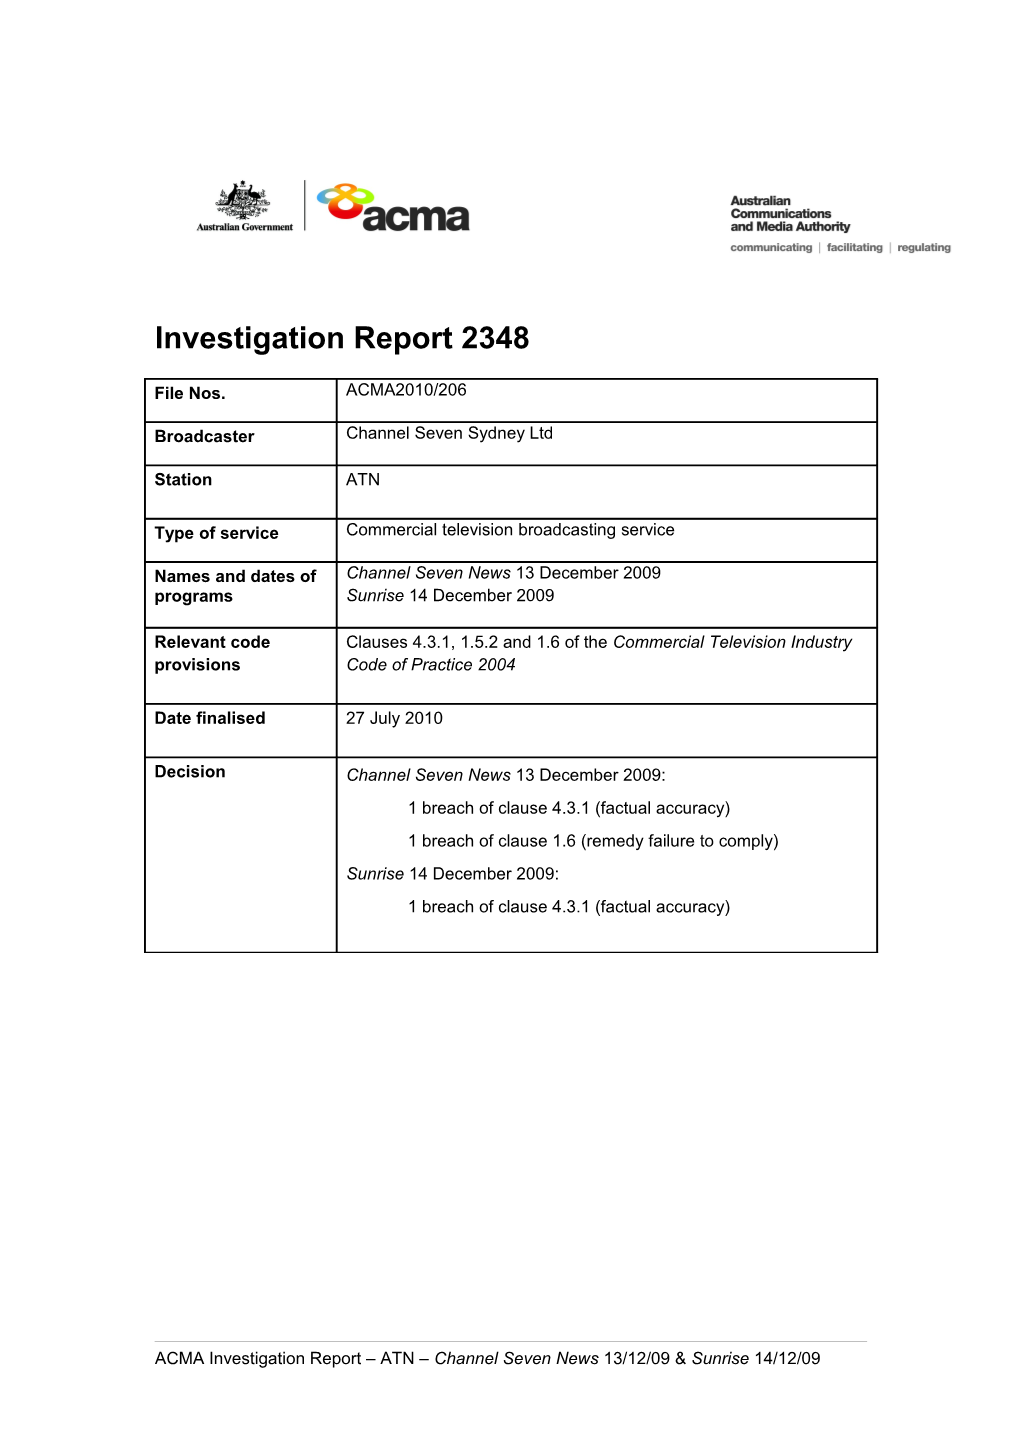 ATN (Ch 7 Sydney) - ACMA Investigation Report 2348